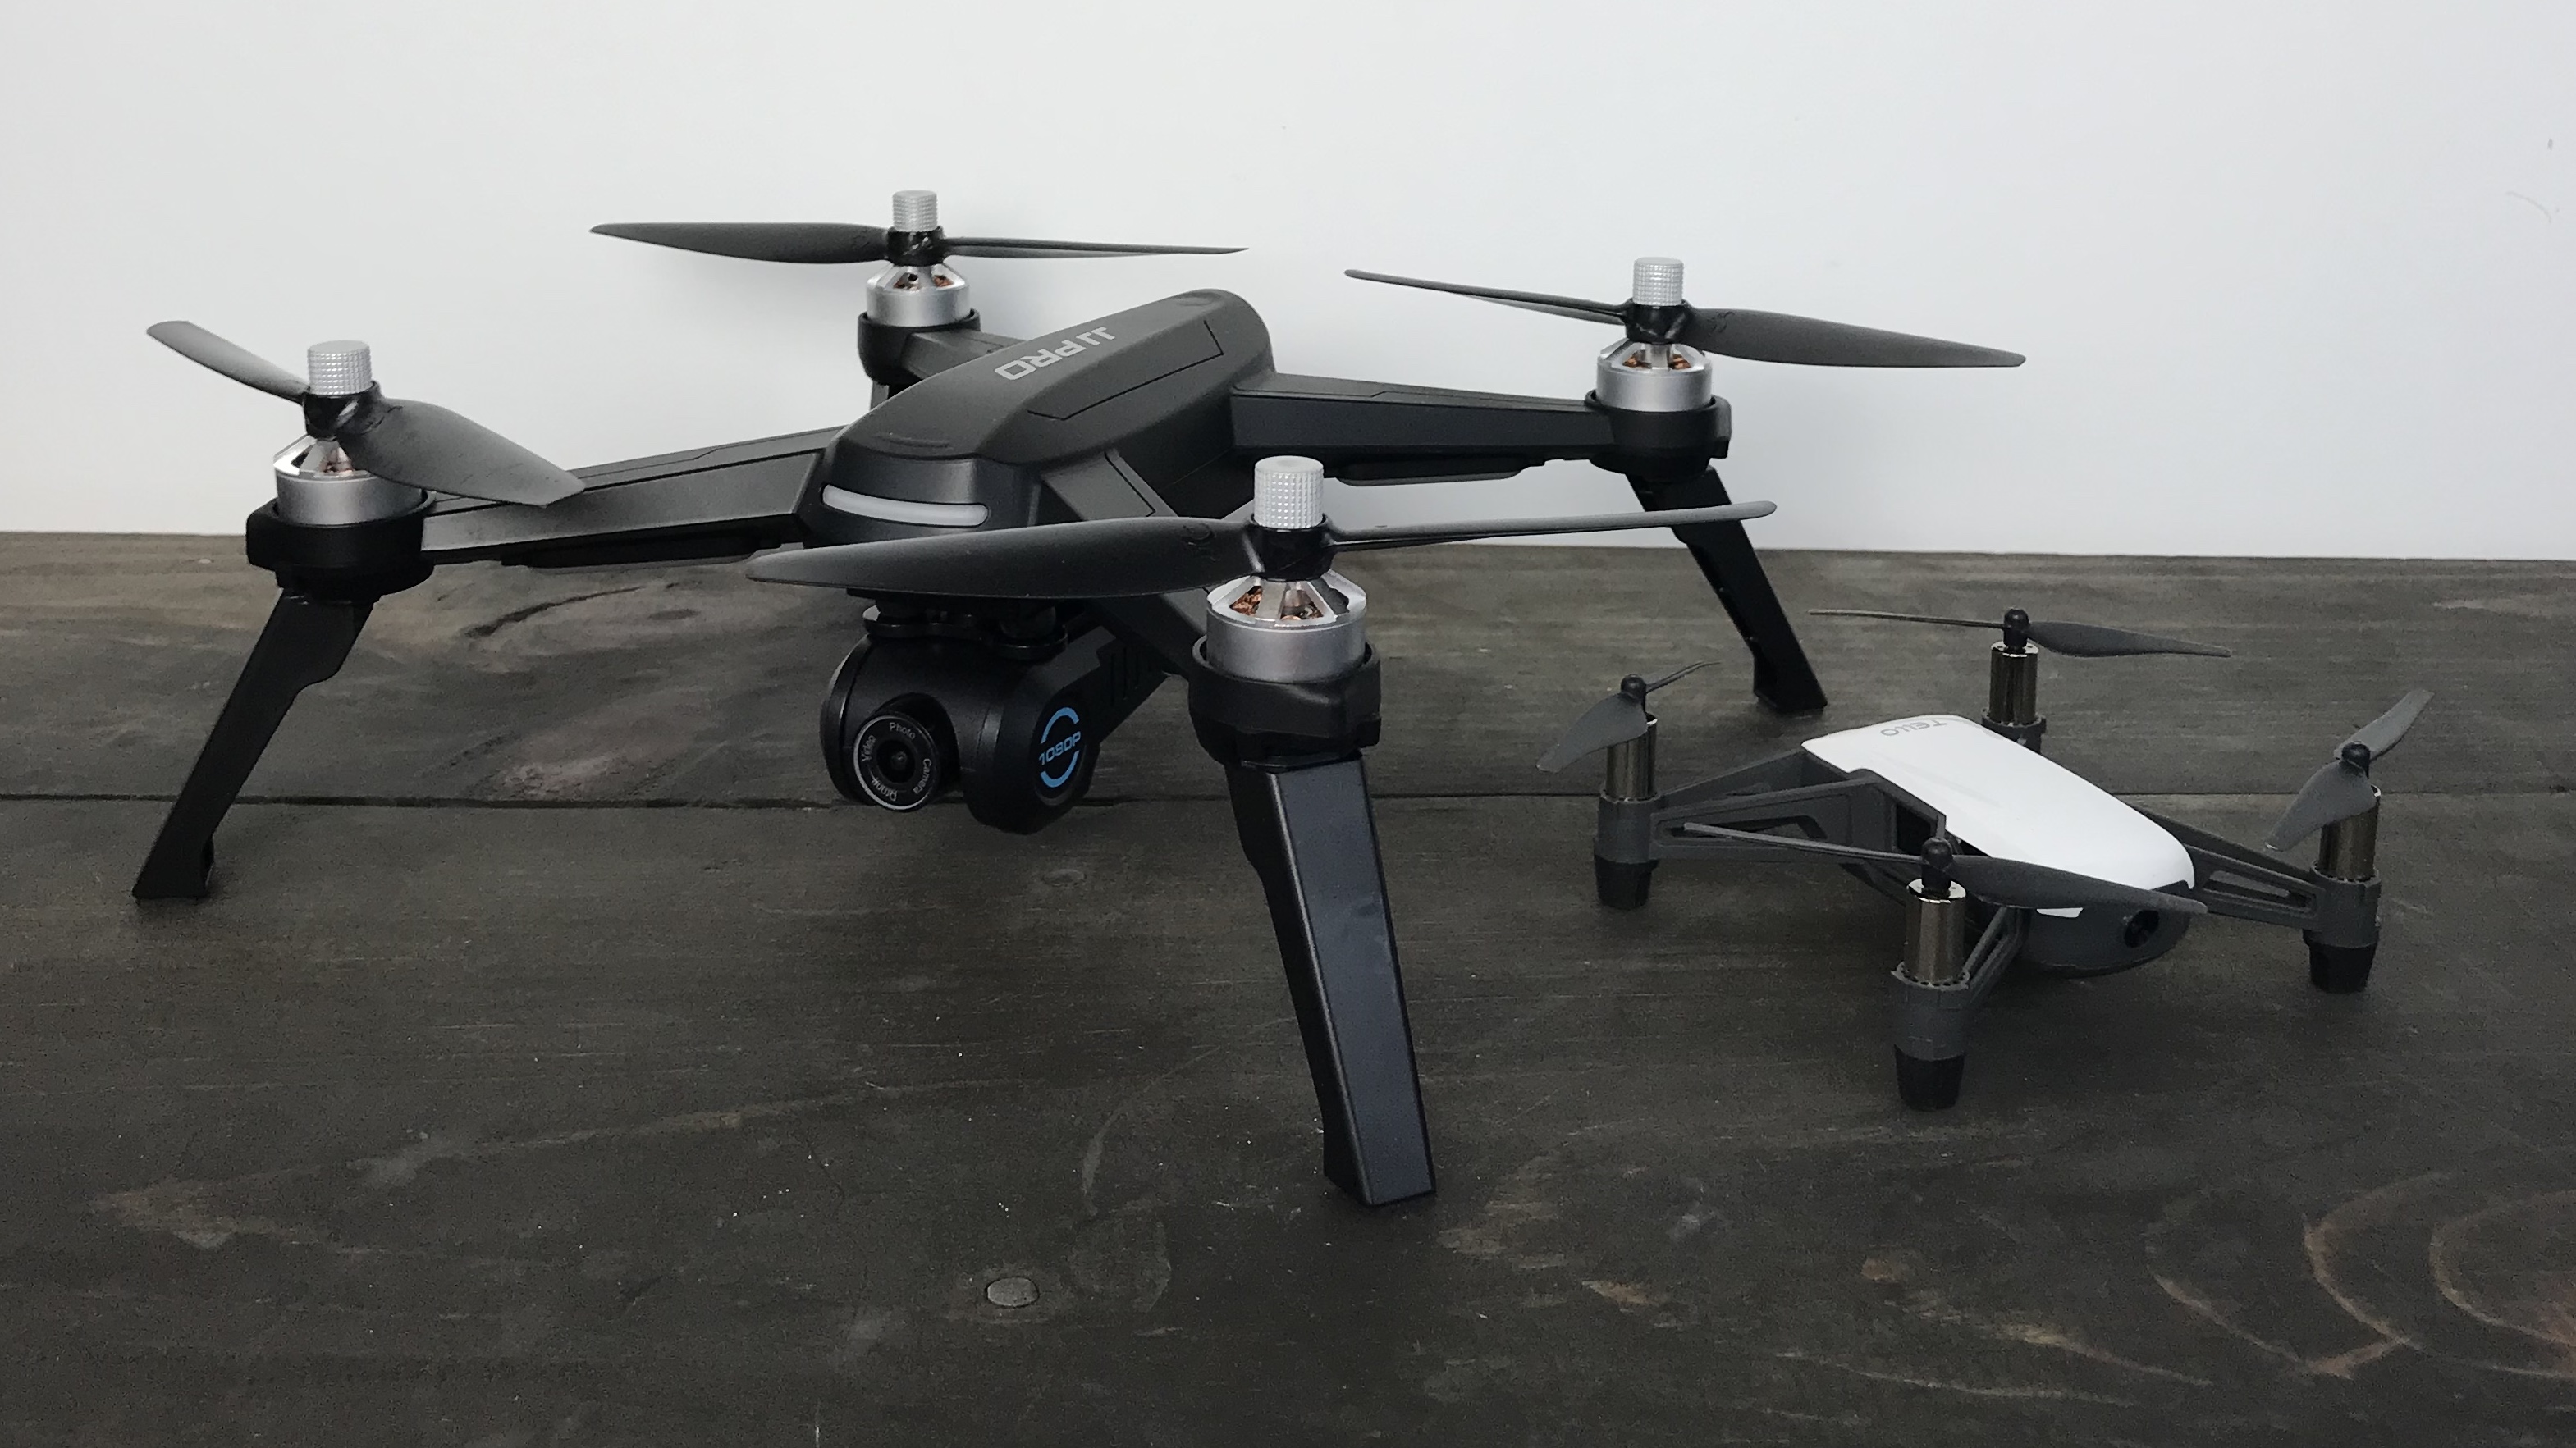 drone jjpro epik x5